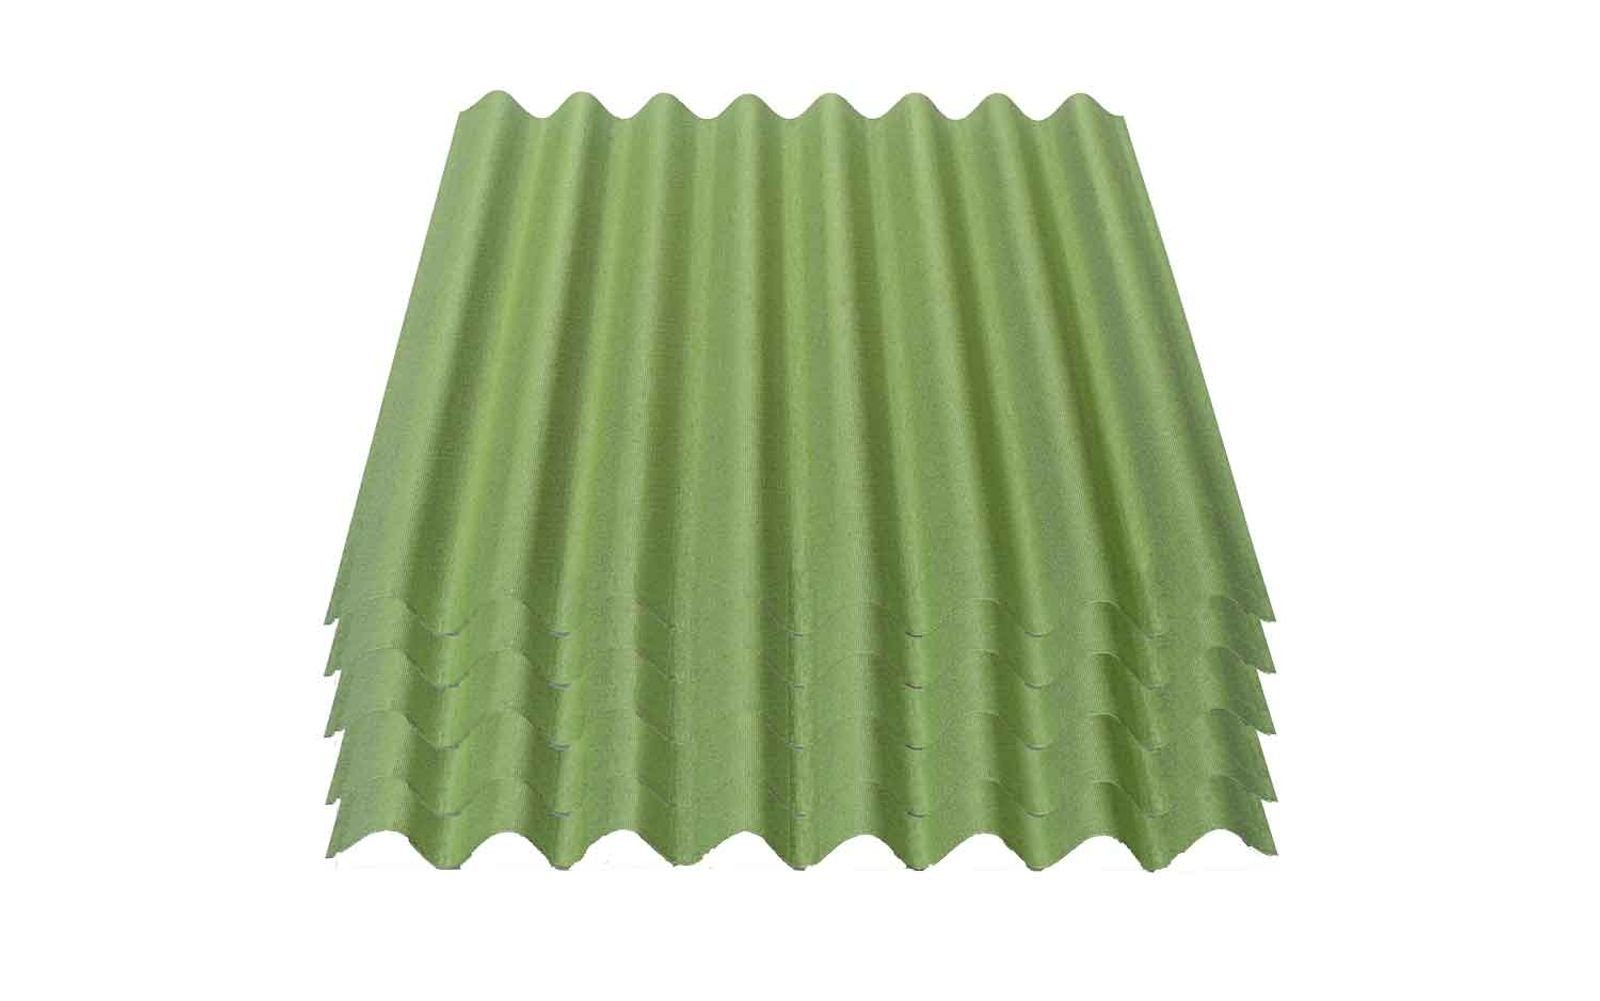 Onduline Dachpappe Onduline Easyline Dachplatte Wandplatte Bitumenwellplatten Wellplatte 5x0,76m² - grün, wellig, 3.8 m² pro Paket, (5-St)